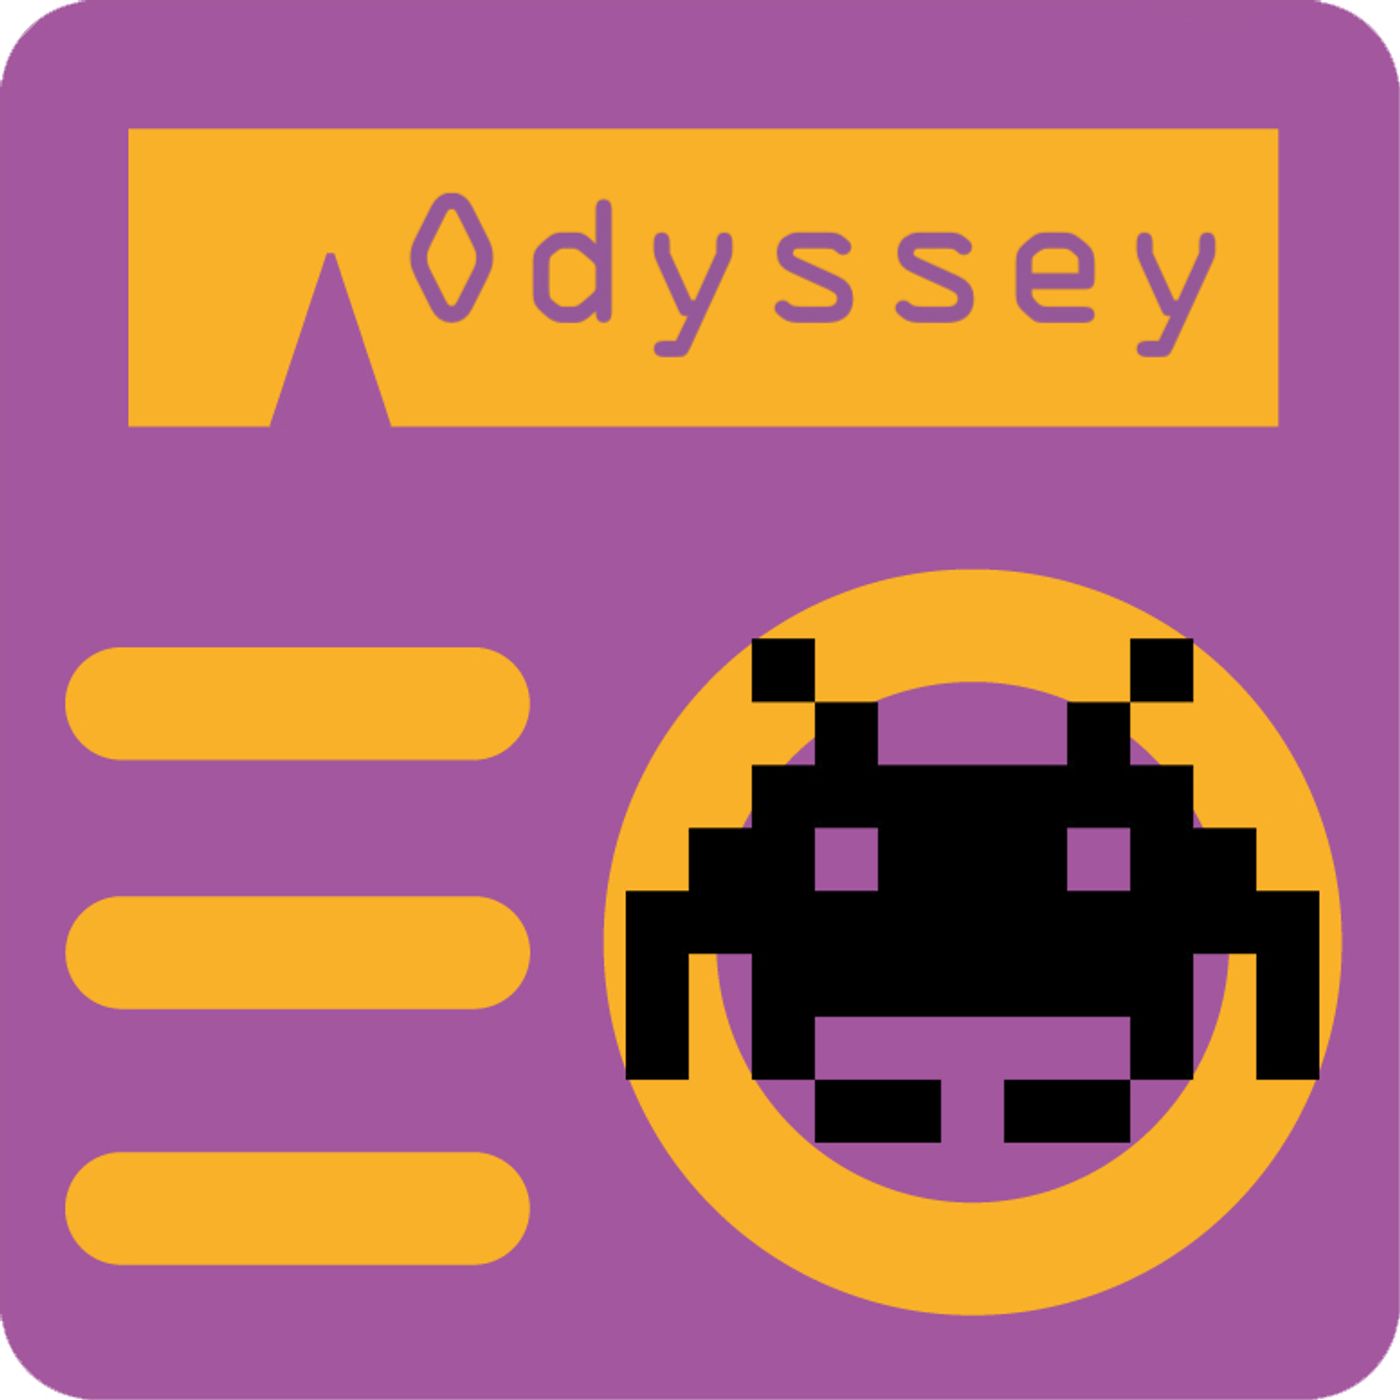 Odyssey Videogames